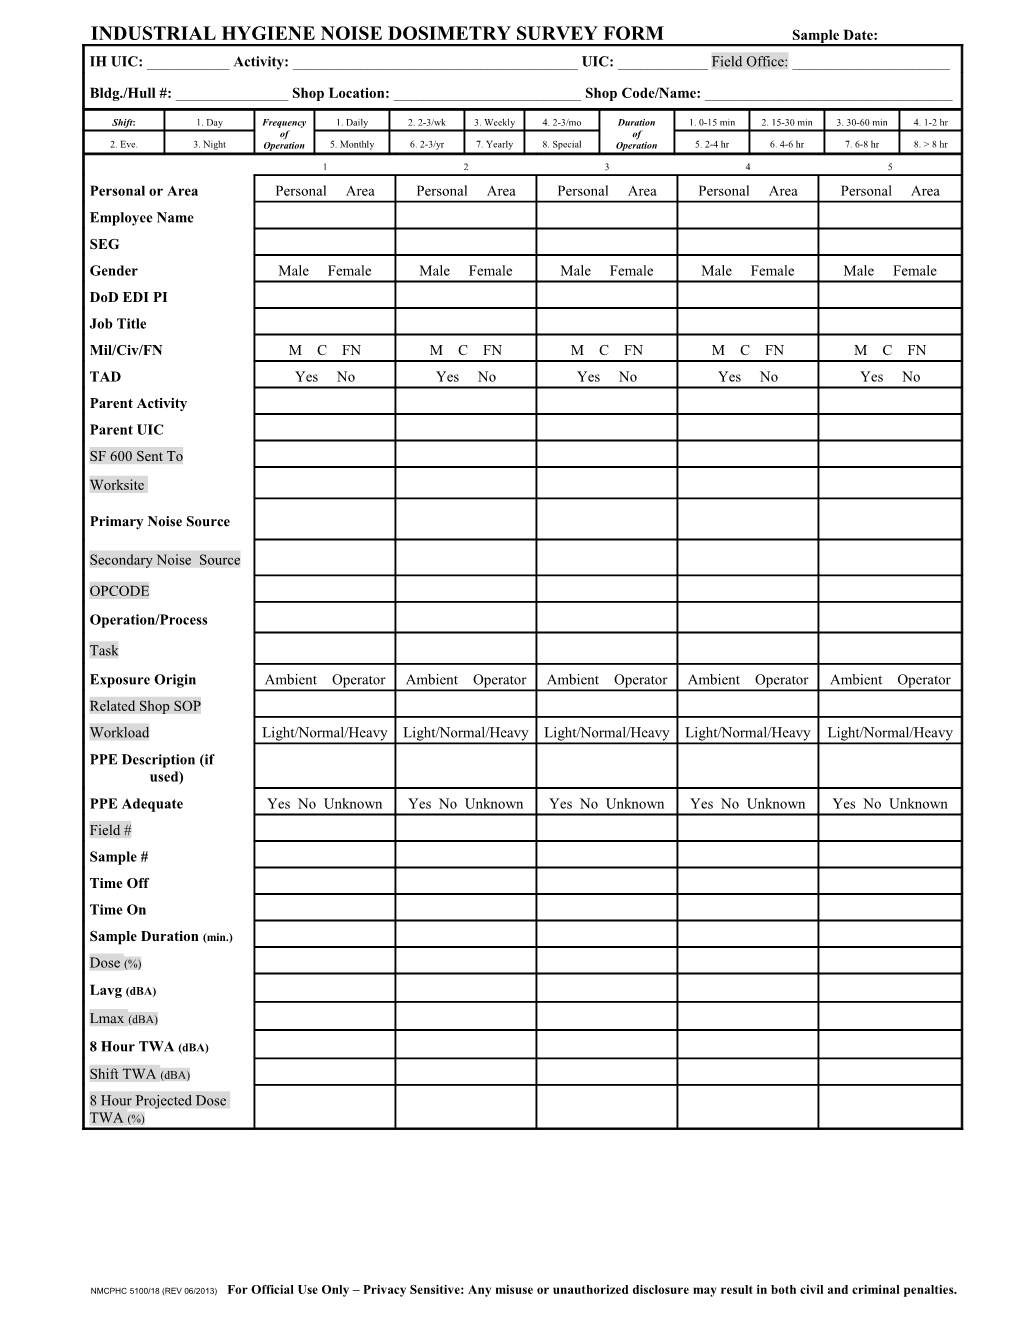 Industrial Hygiene Noise Dosimetry Survey Form